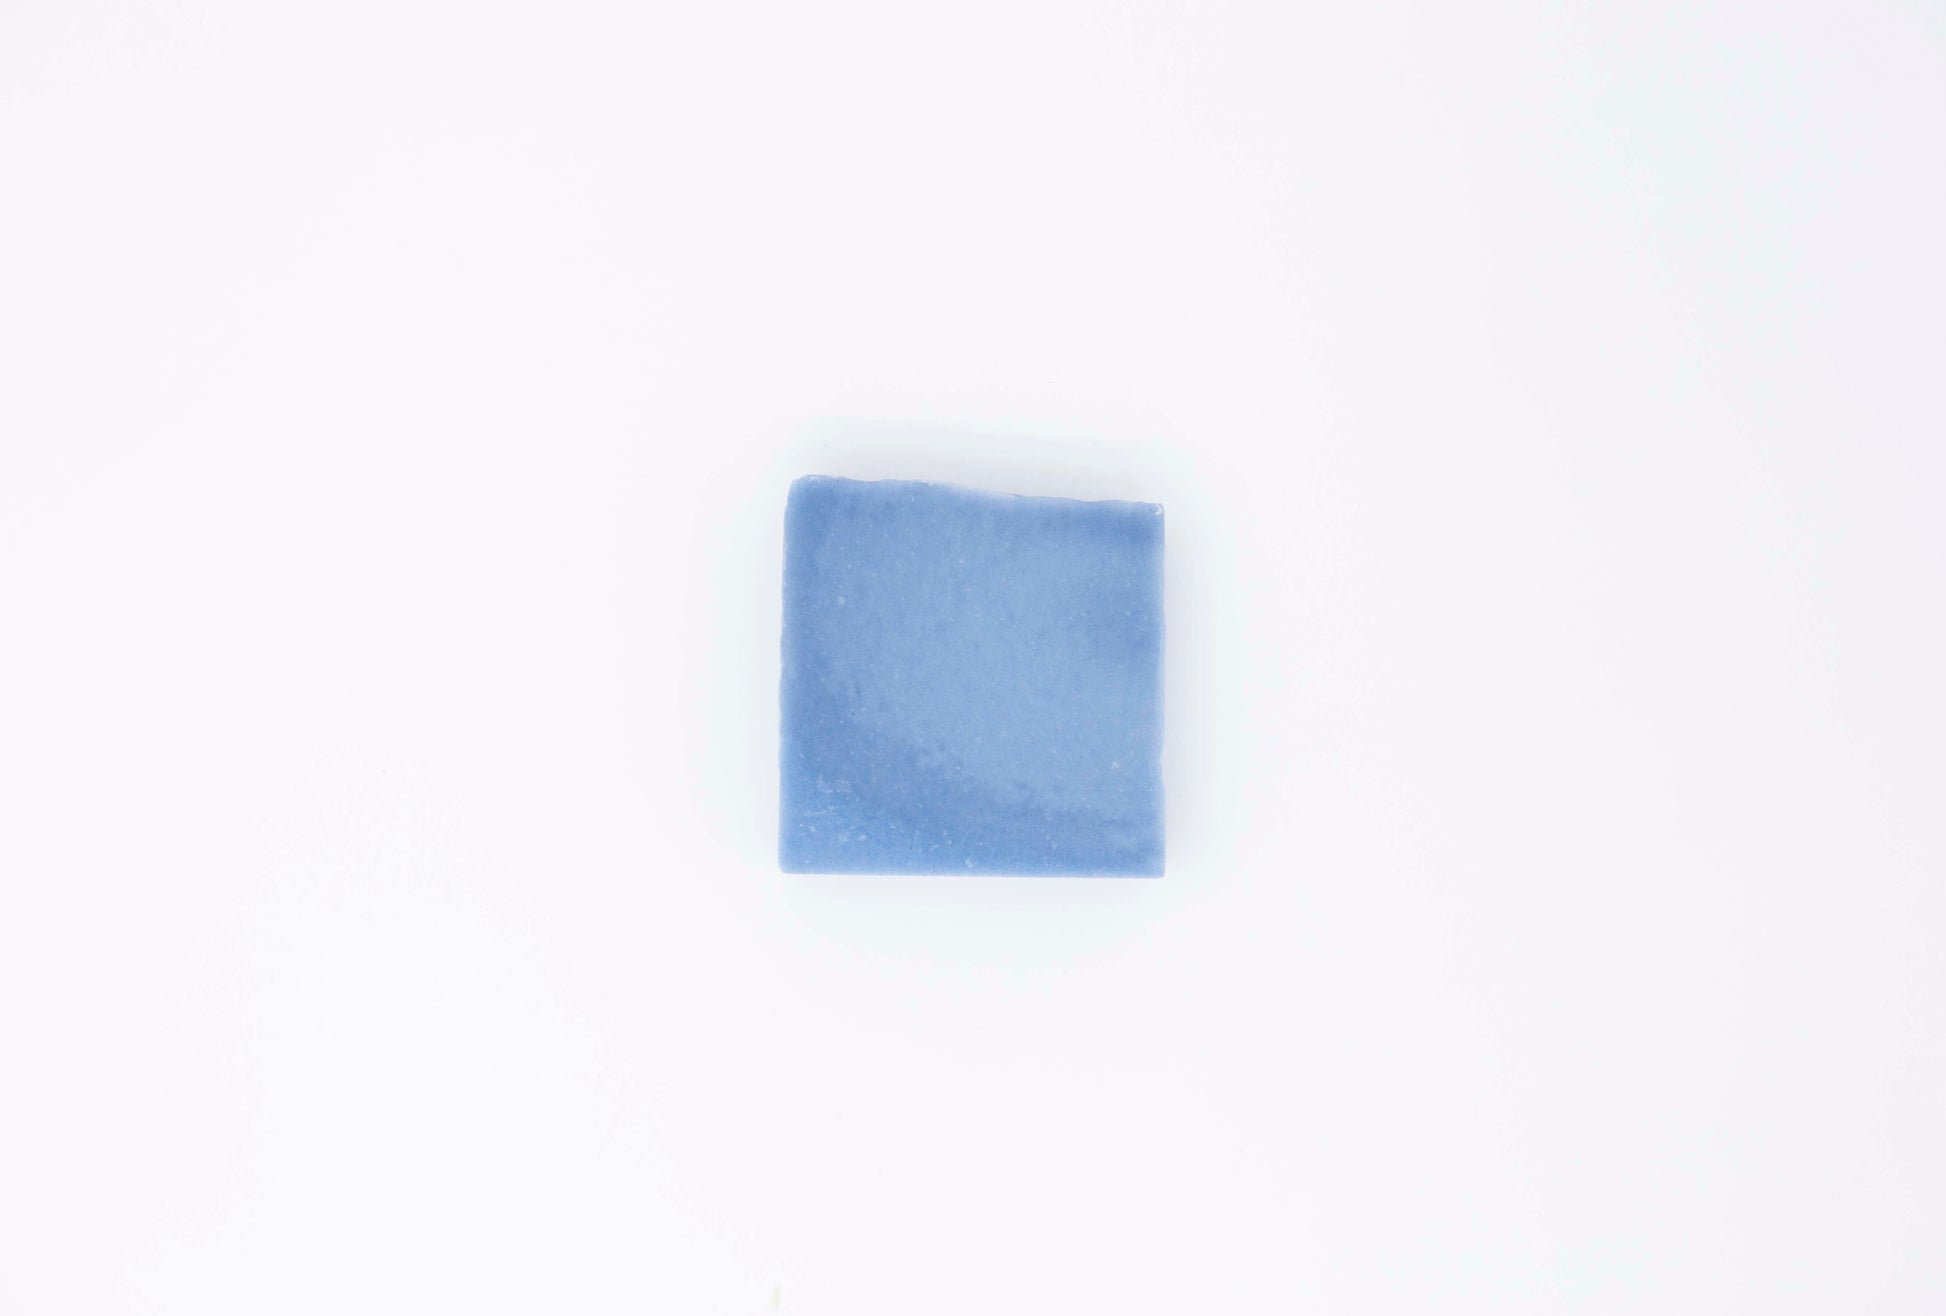 Royal cornflower blue eucalyptus soap bar  sits on a clean white background.